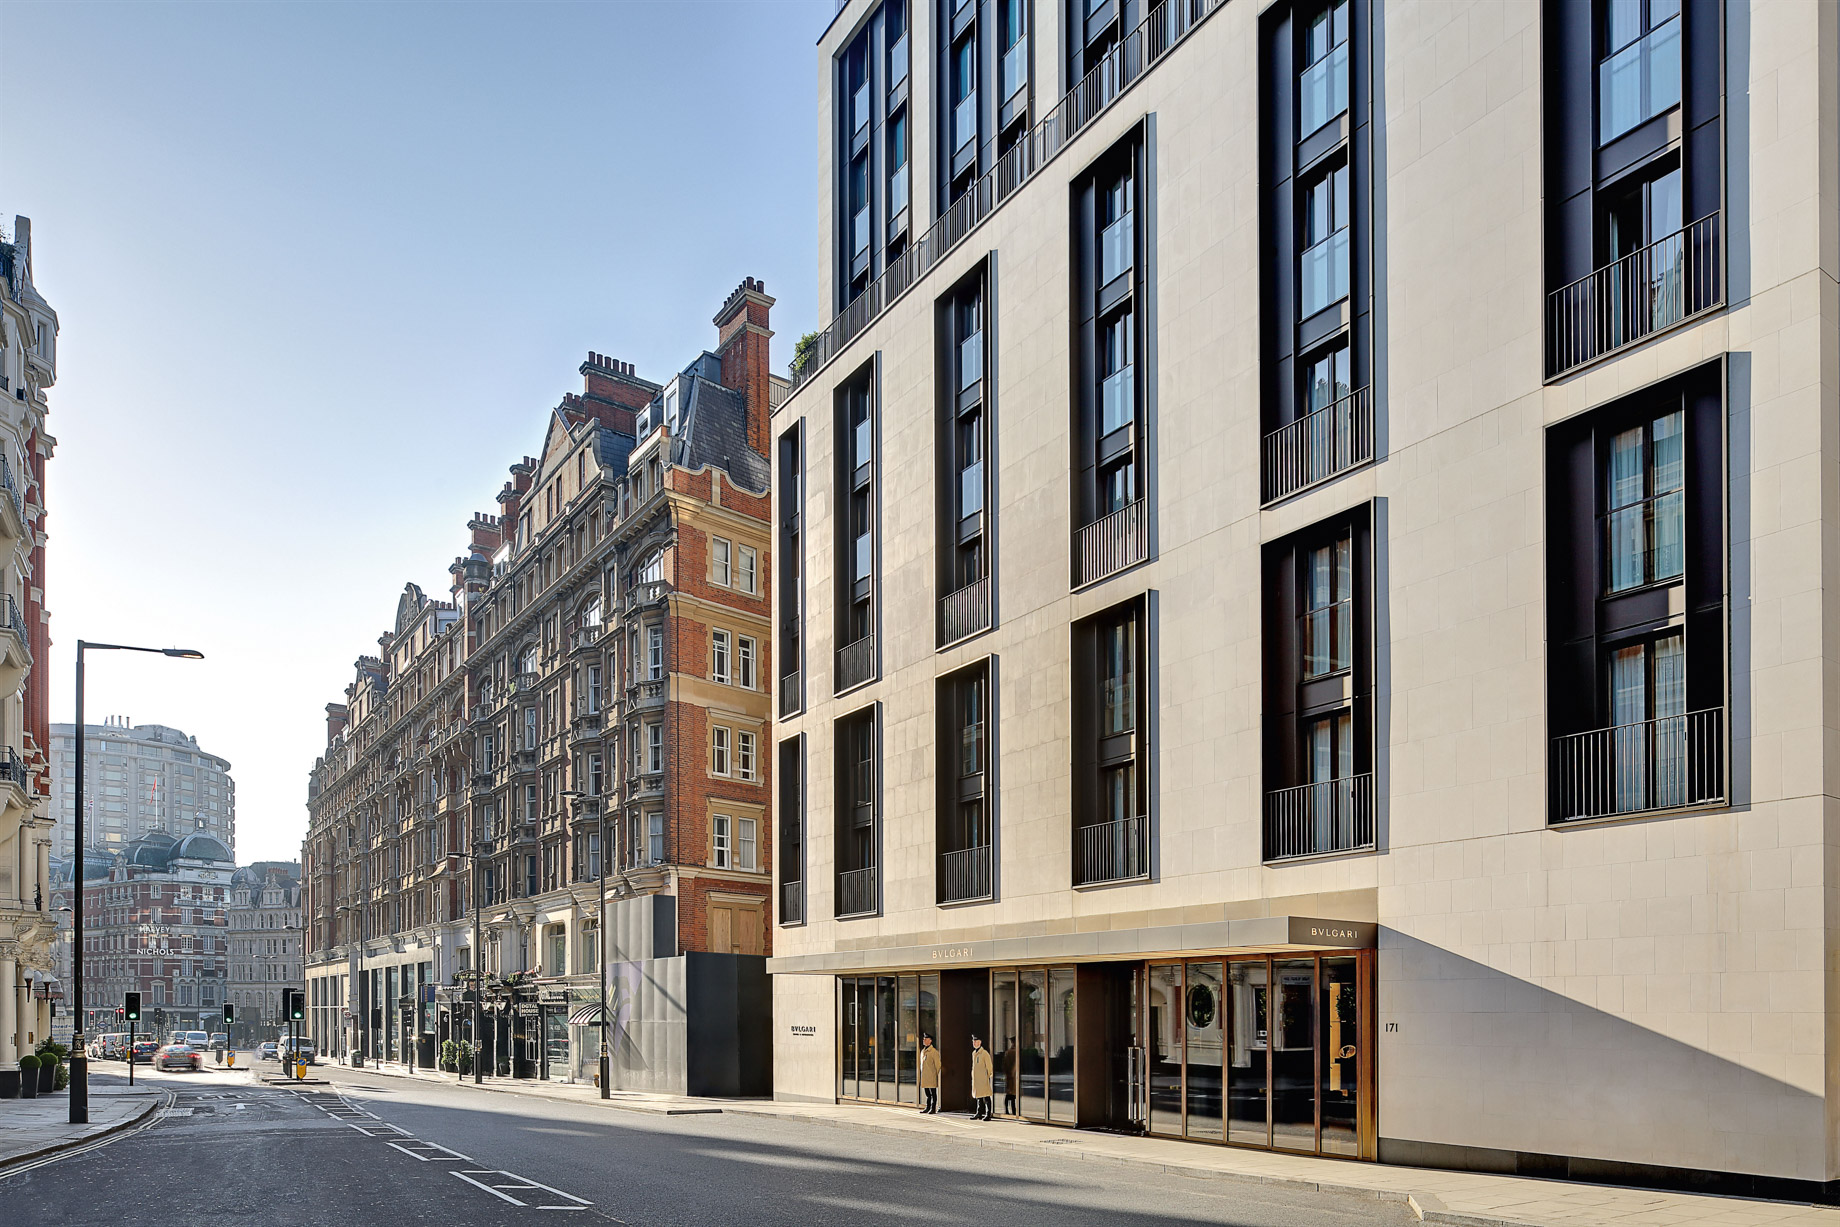 Bvlgari Hotel London – Knightsbridge, London, UK – Hotel Street Facade